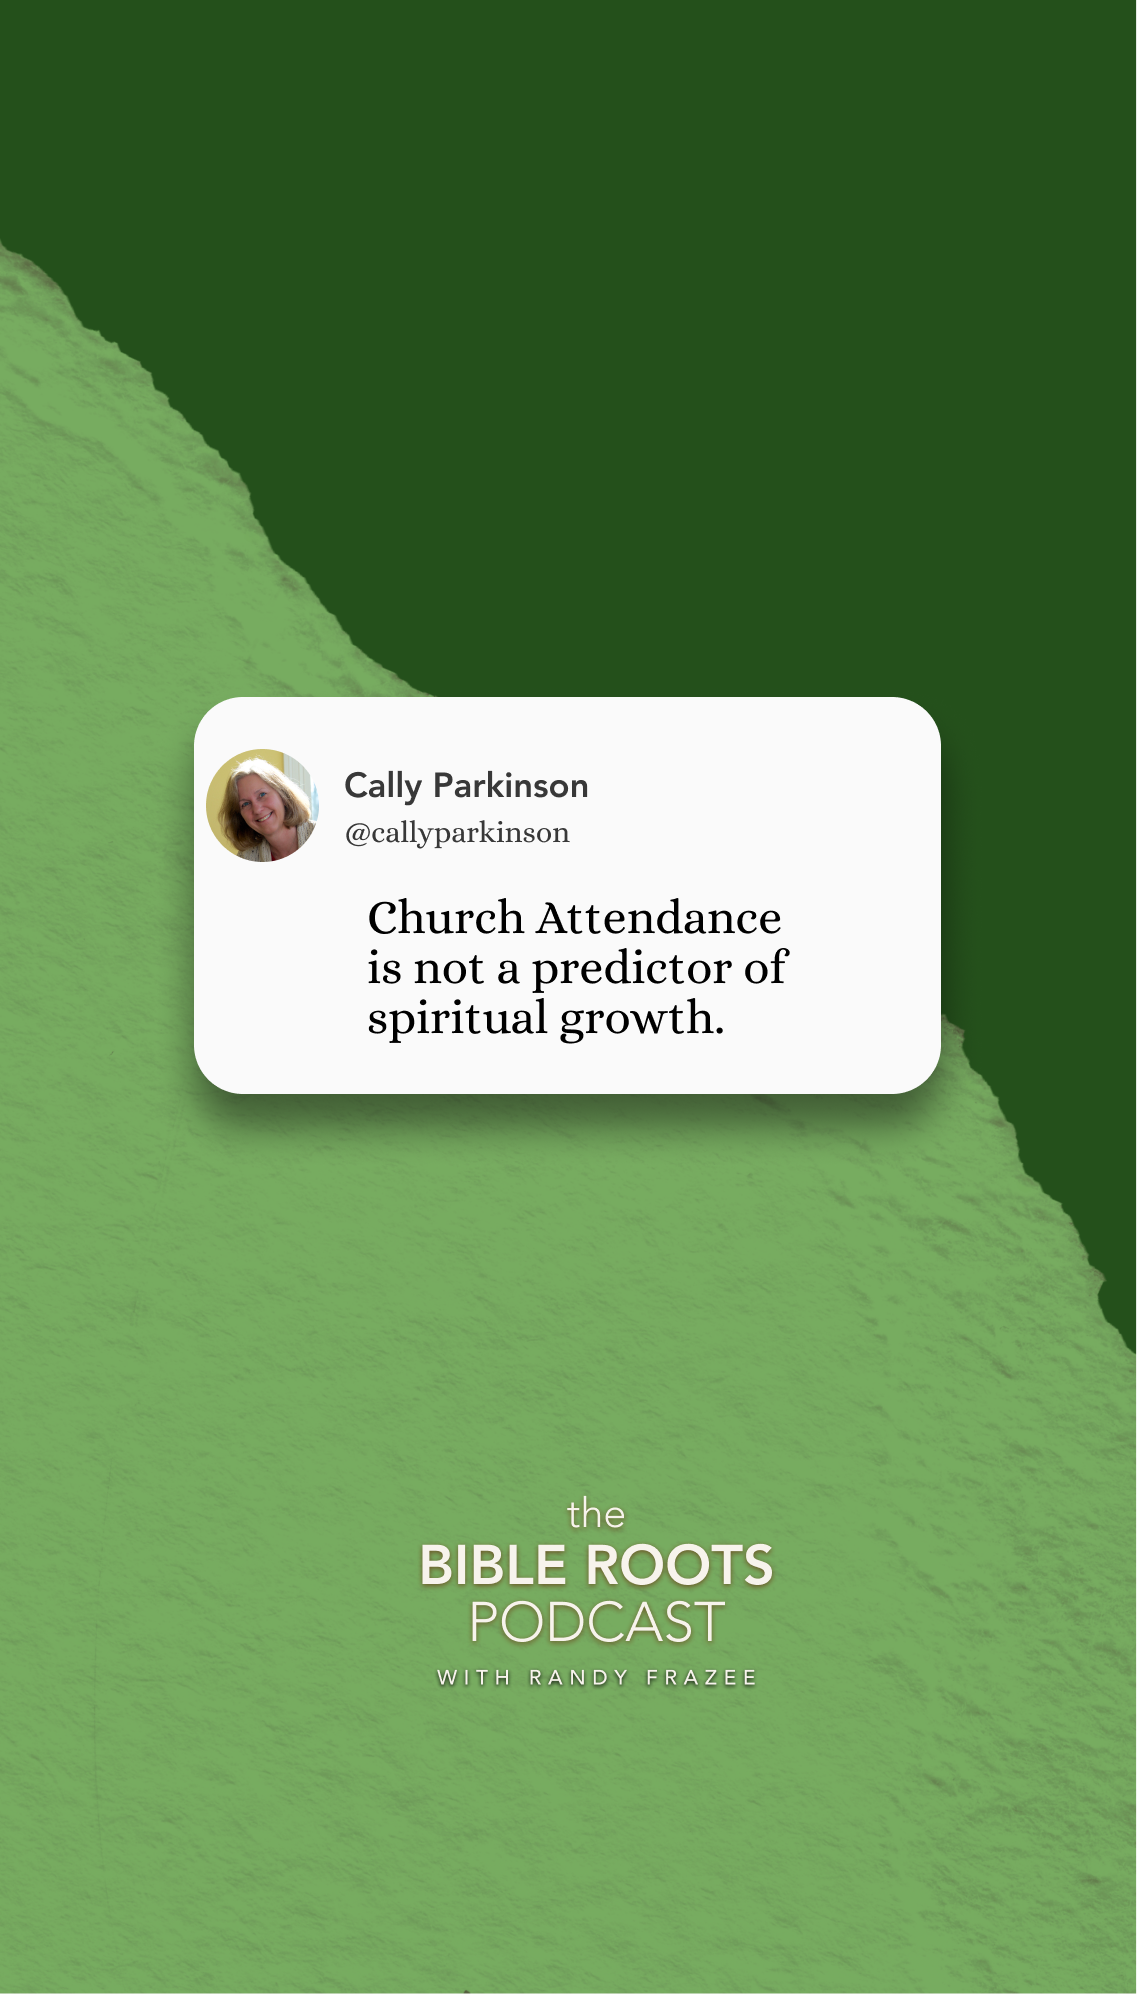 "Church Attendance is not a predictor of spiritual growth." Cally Parkinson